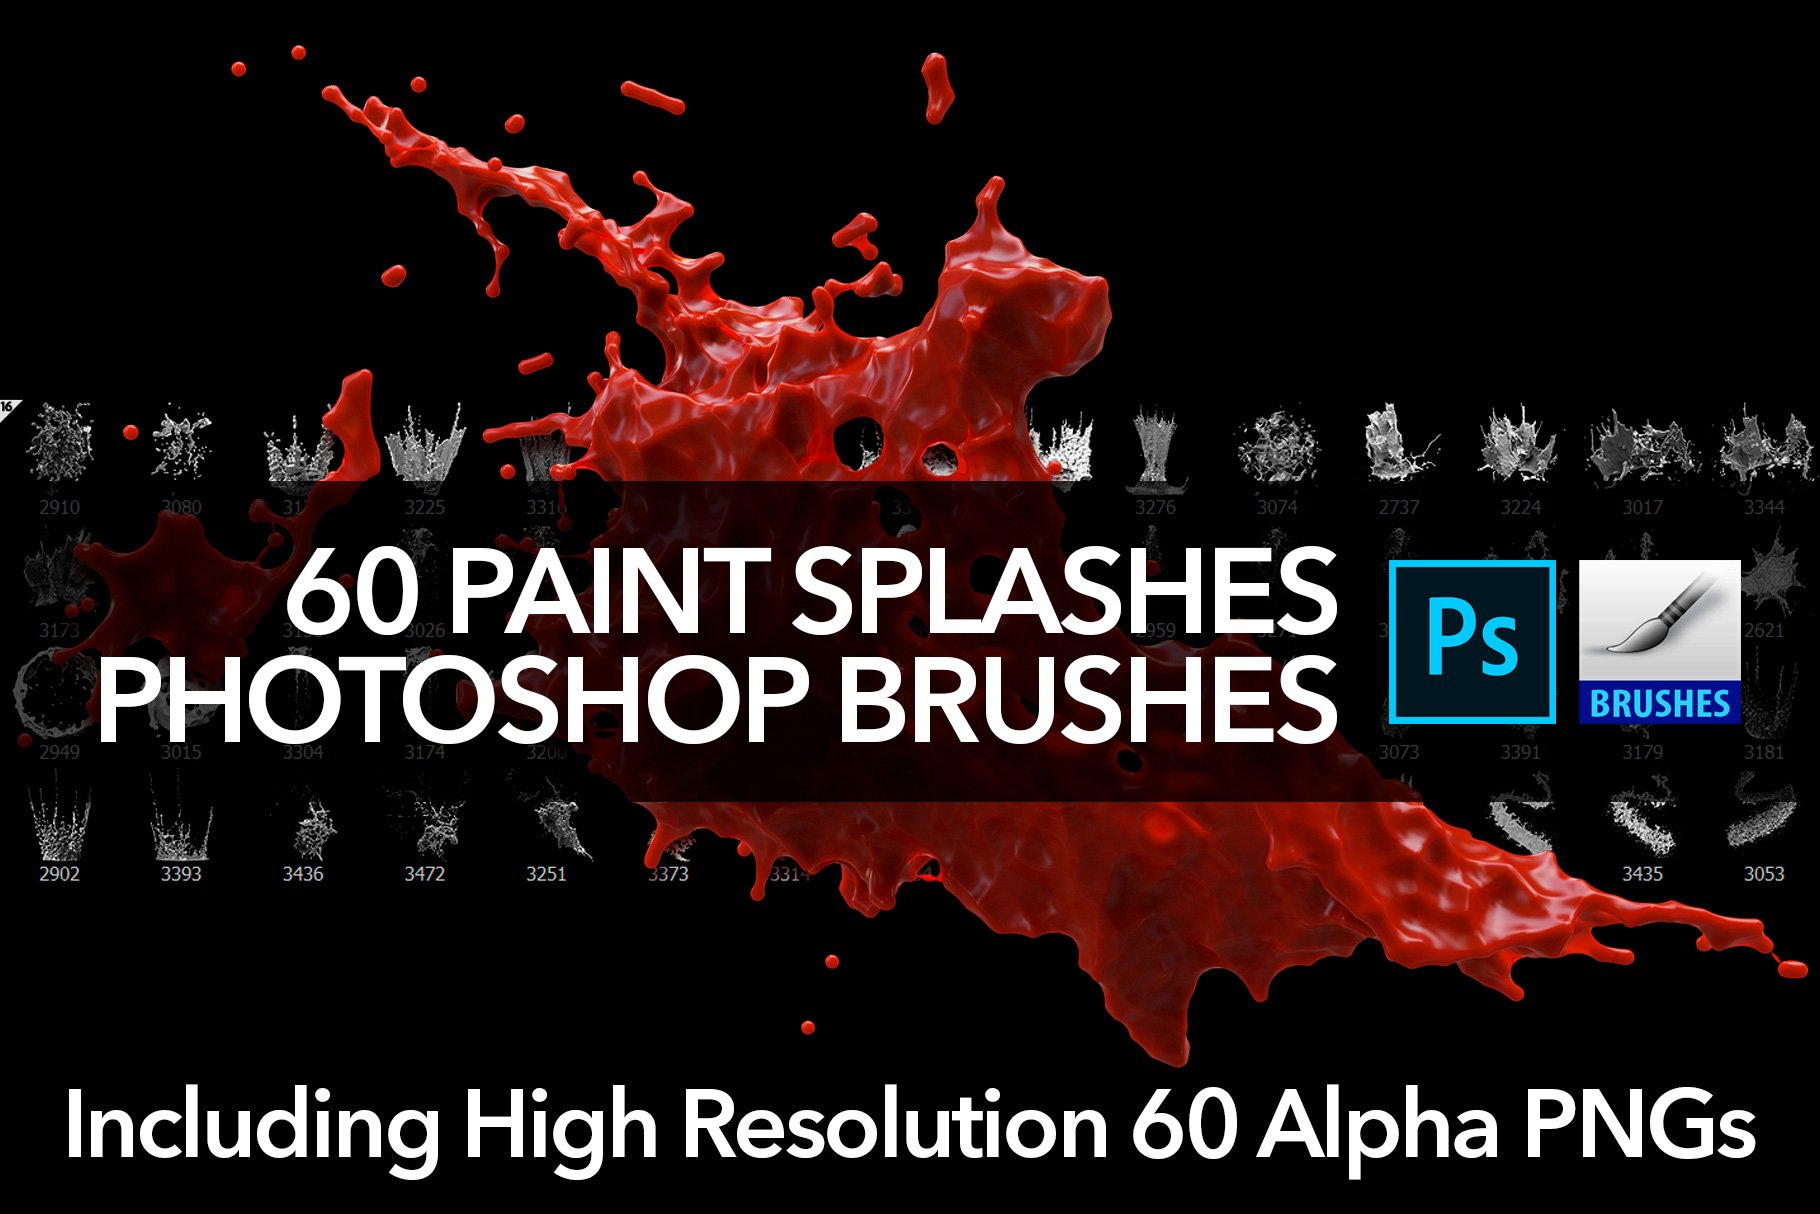 60 Paint Splash Brushes for PScover image.